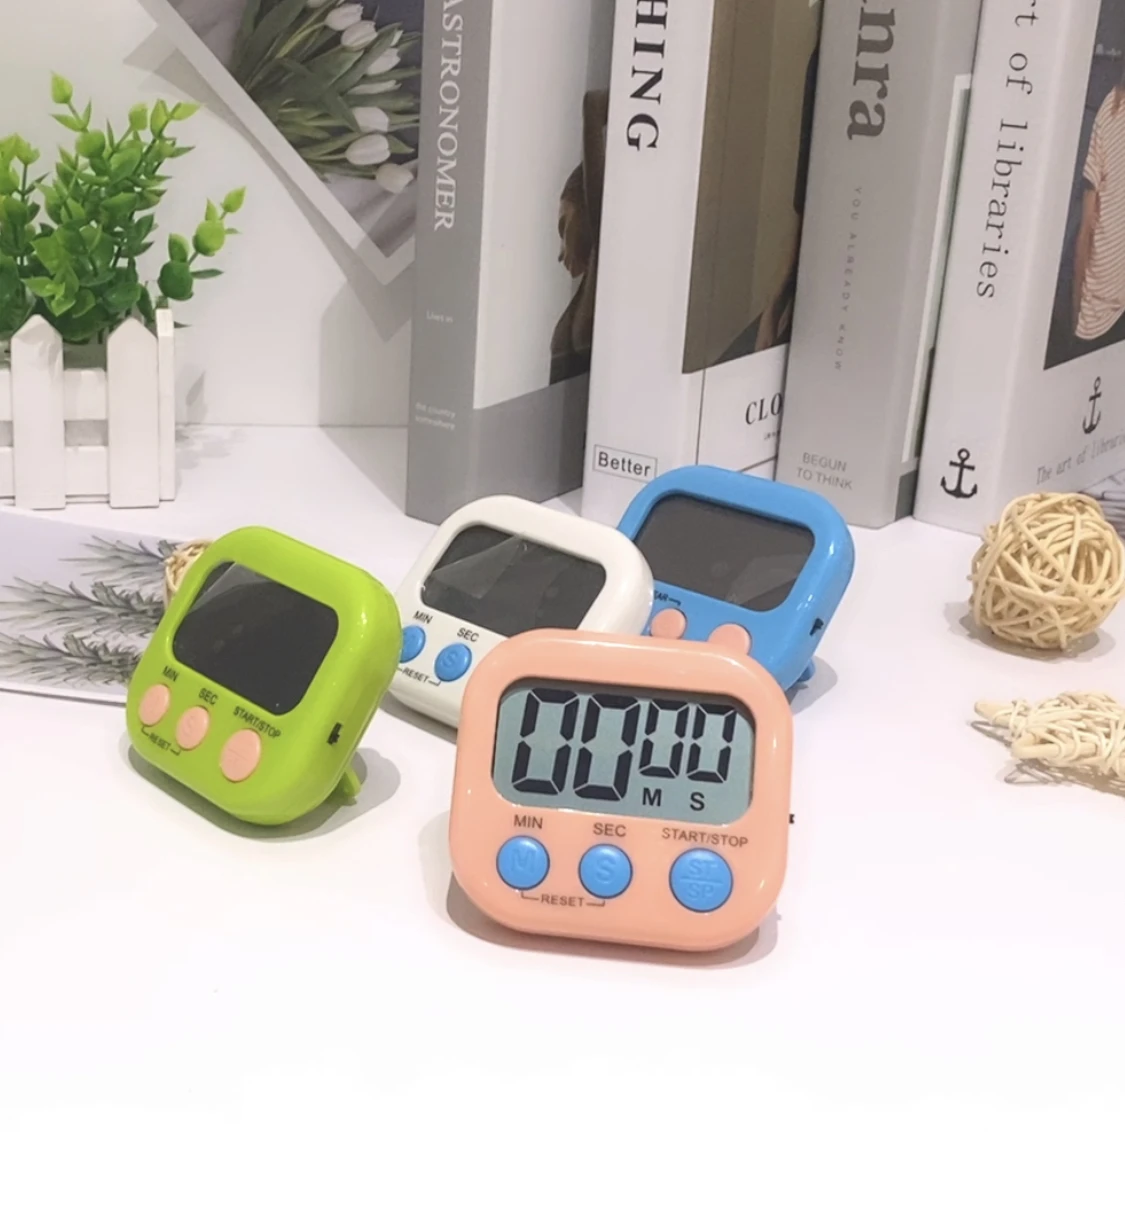 wholesale mini lcd kitchen digital timer